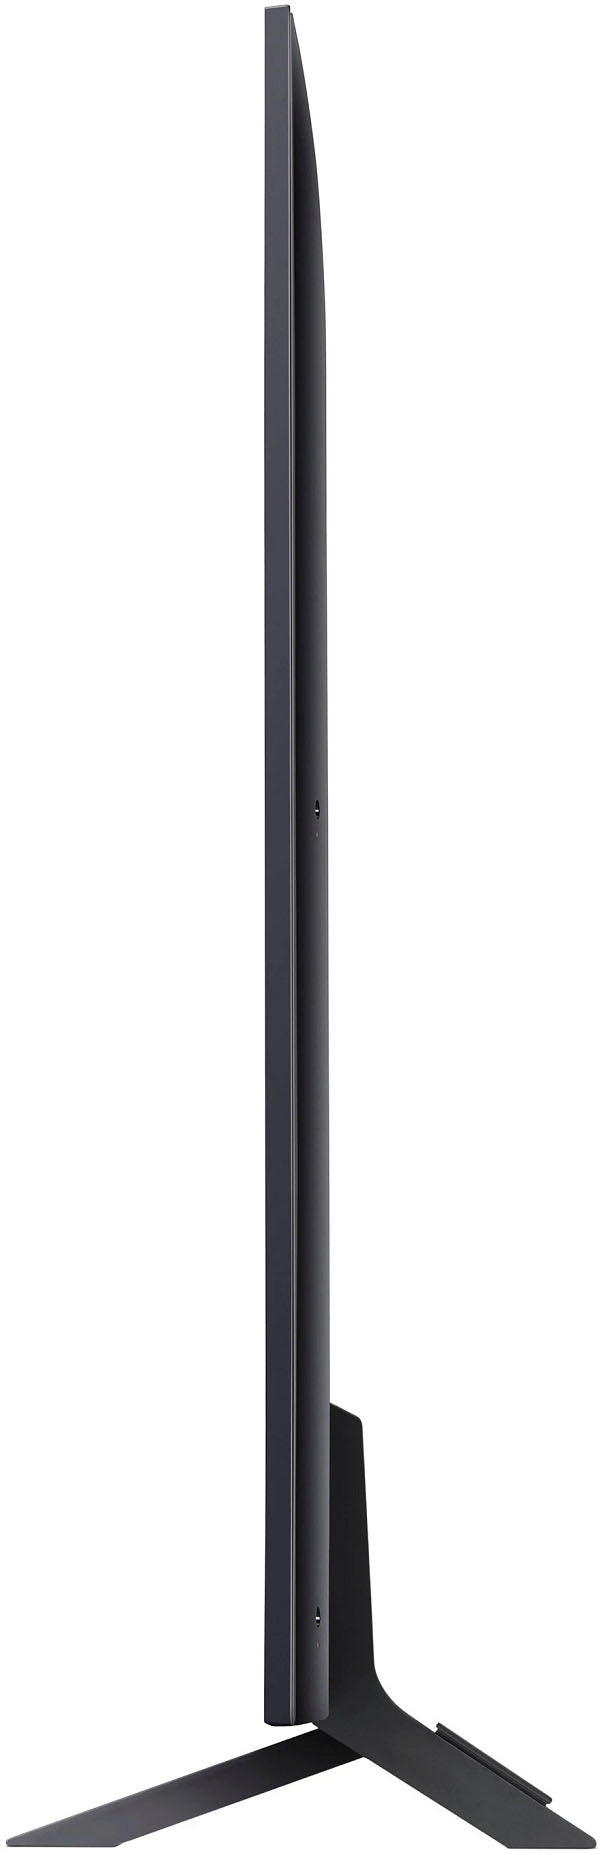 LG - 50” Class UR9000 Series LED 4K UHD Smart webOS TV_11